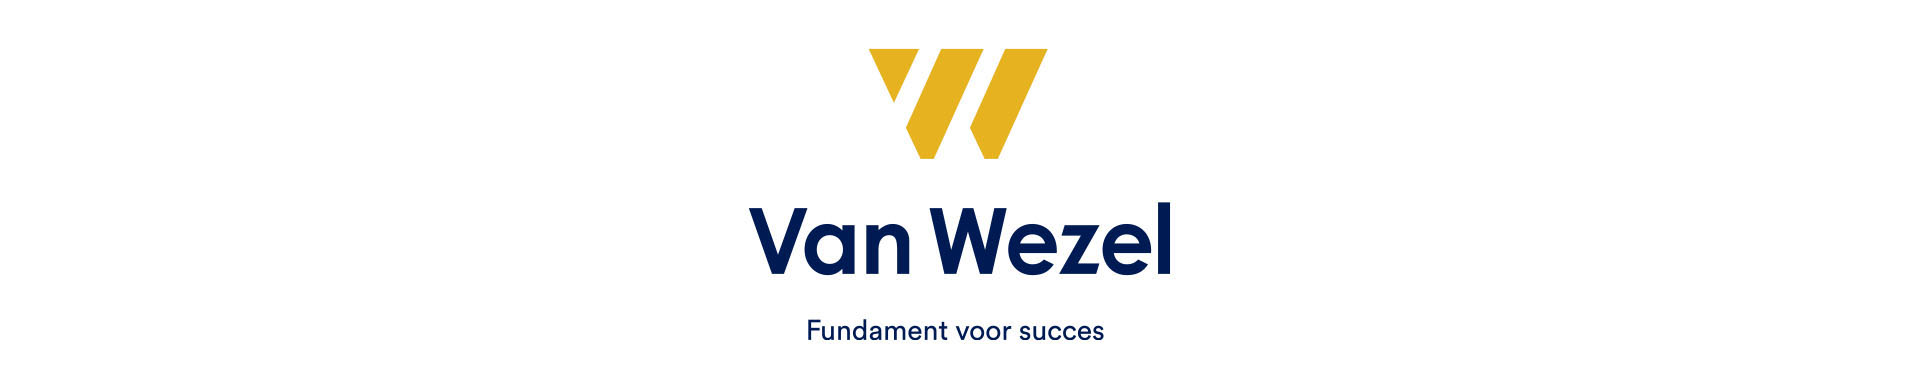 Van Wezel Logo